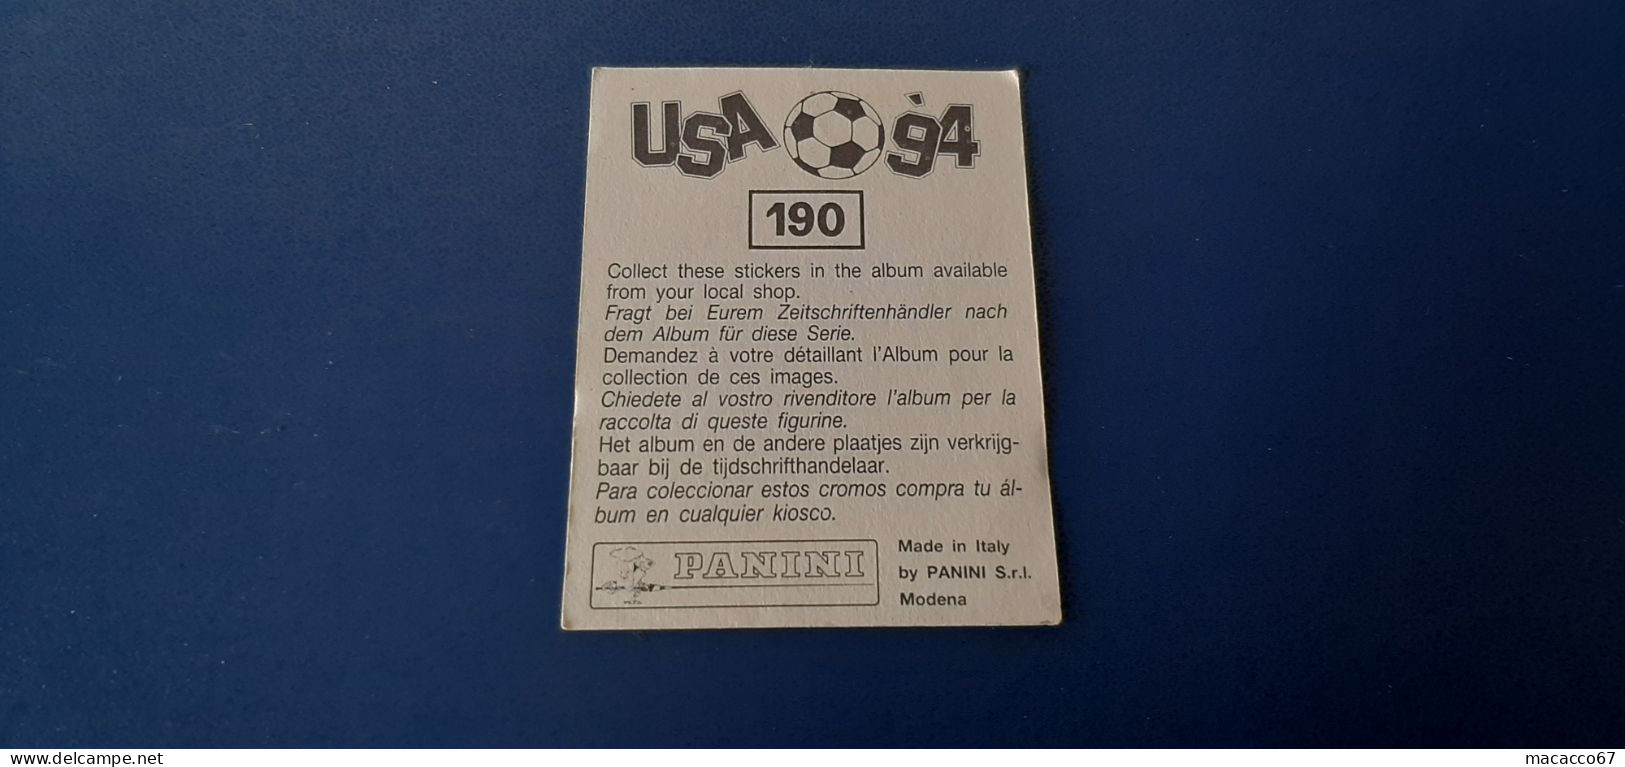 Figurina Panini WM USA 94 - 190 Alcorta Spagna - Italian Edition